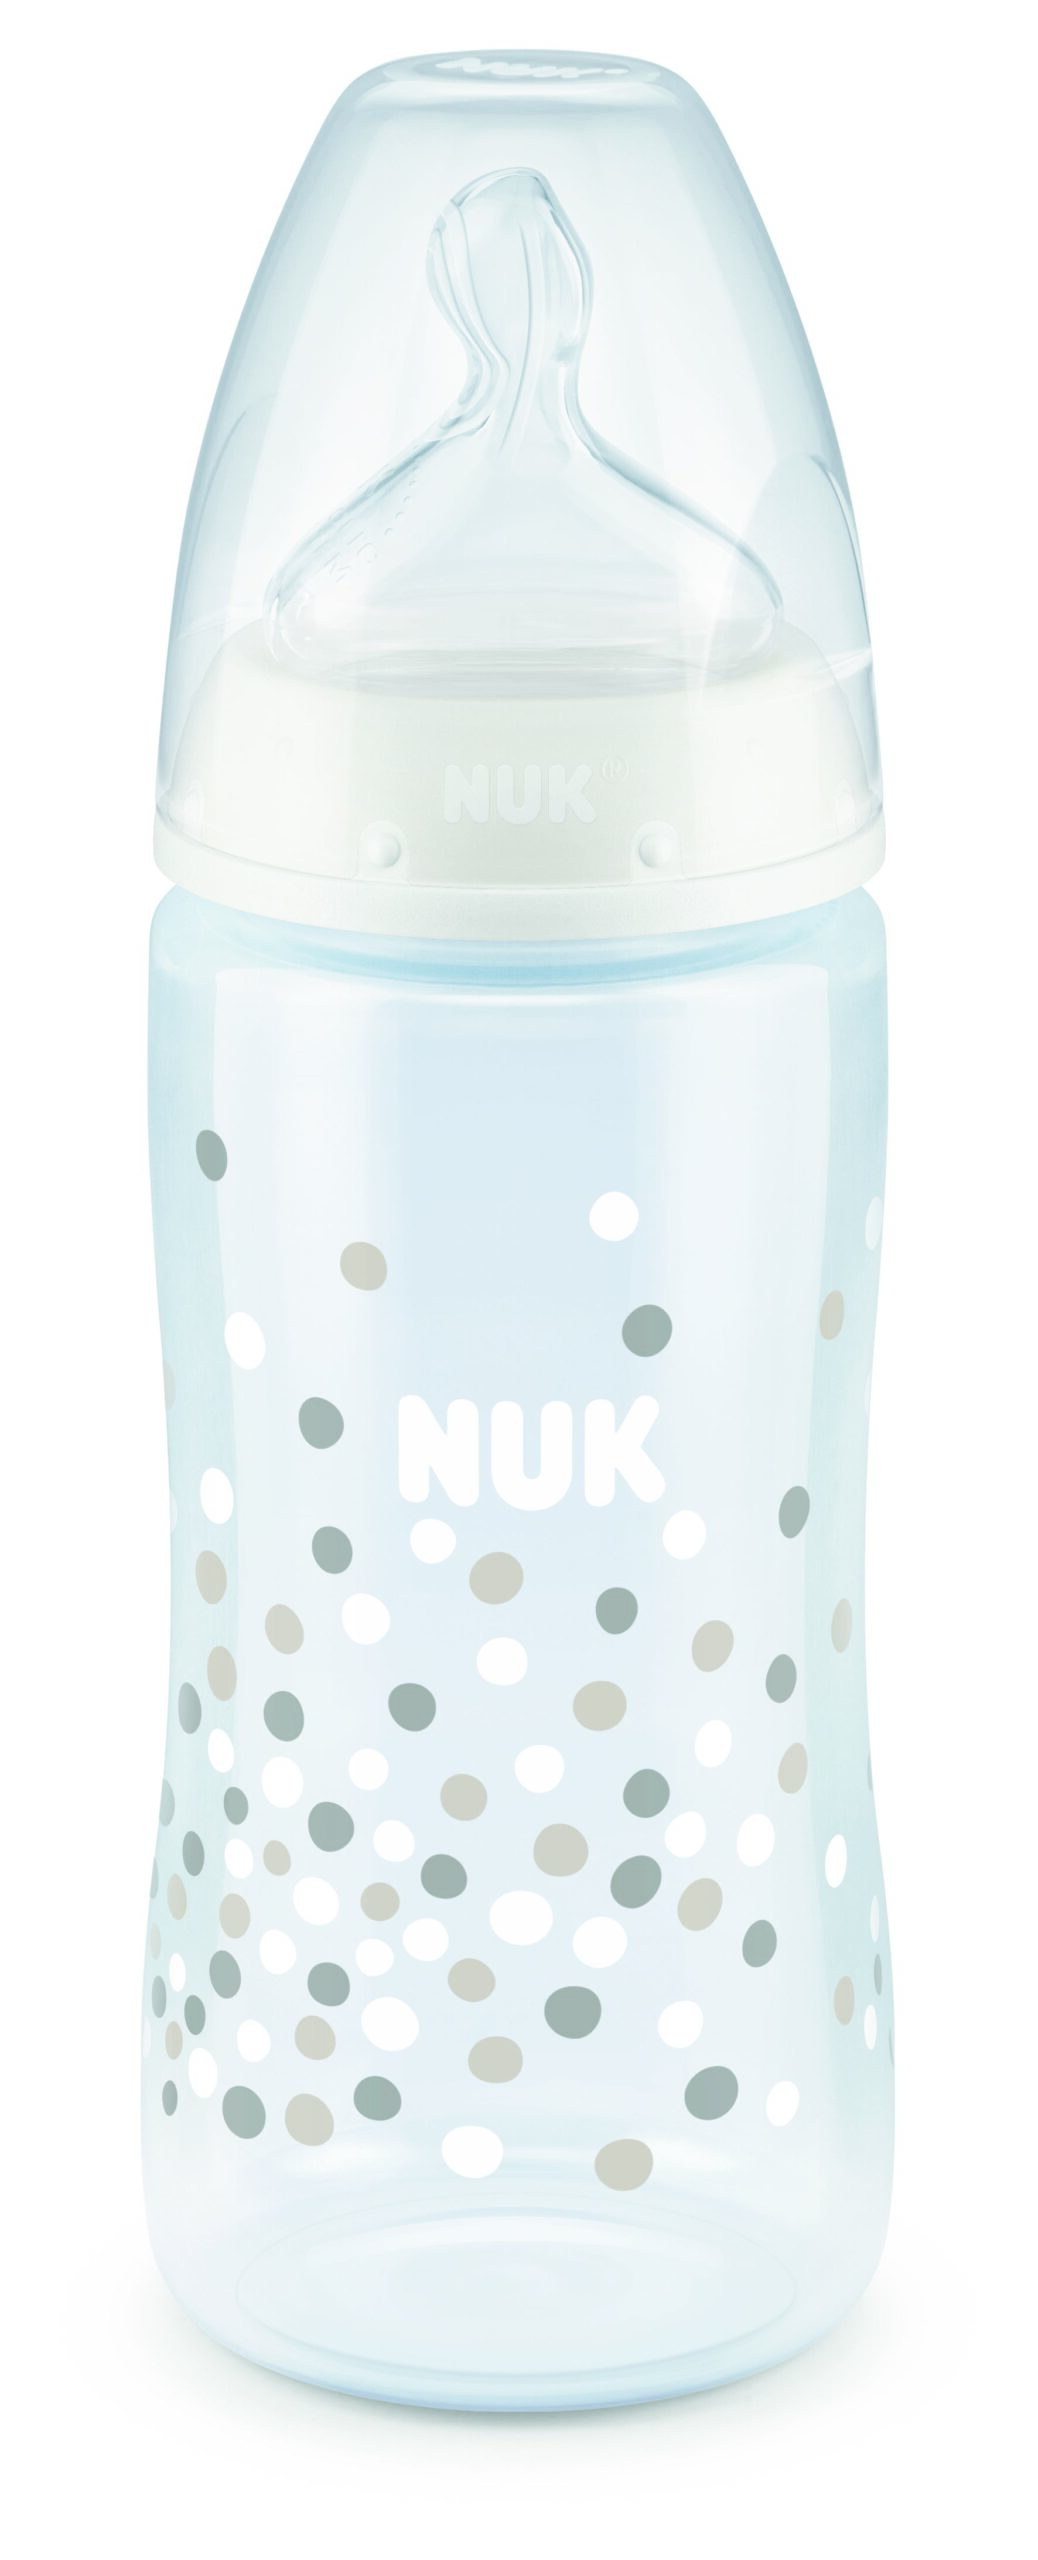 NUK® Smooth Flow Bottle Newborn Gift Set Product Image 3 of 10